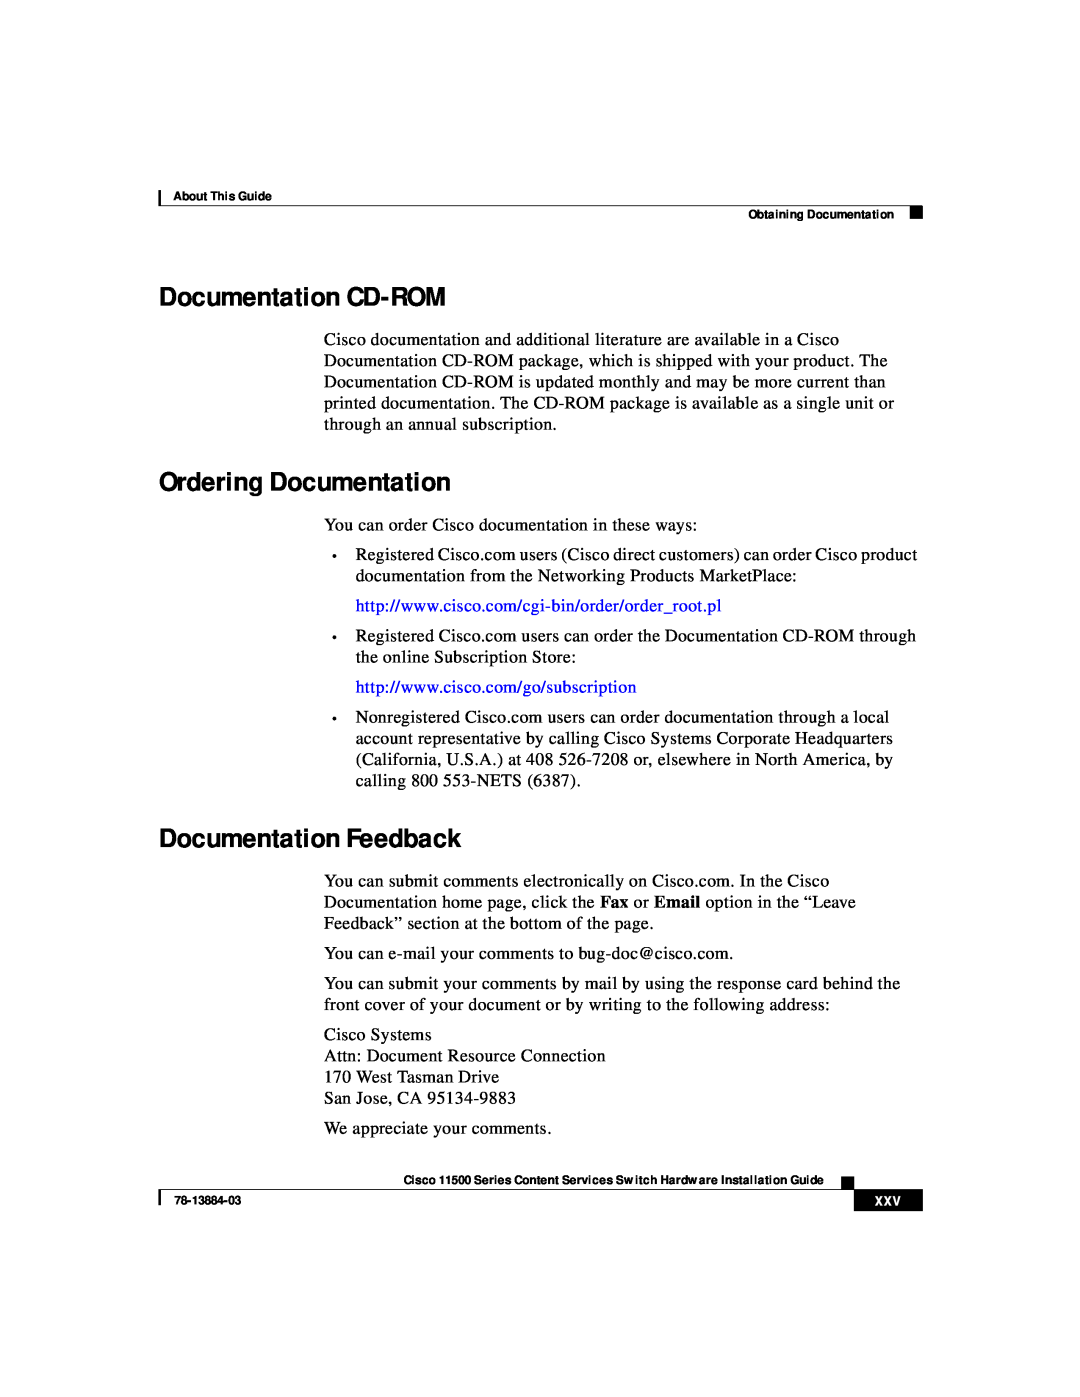 Cisco Systems 11500 Series manual Documentation CD-ROM, Ordering Documentation, Documentation Feedback 